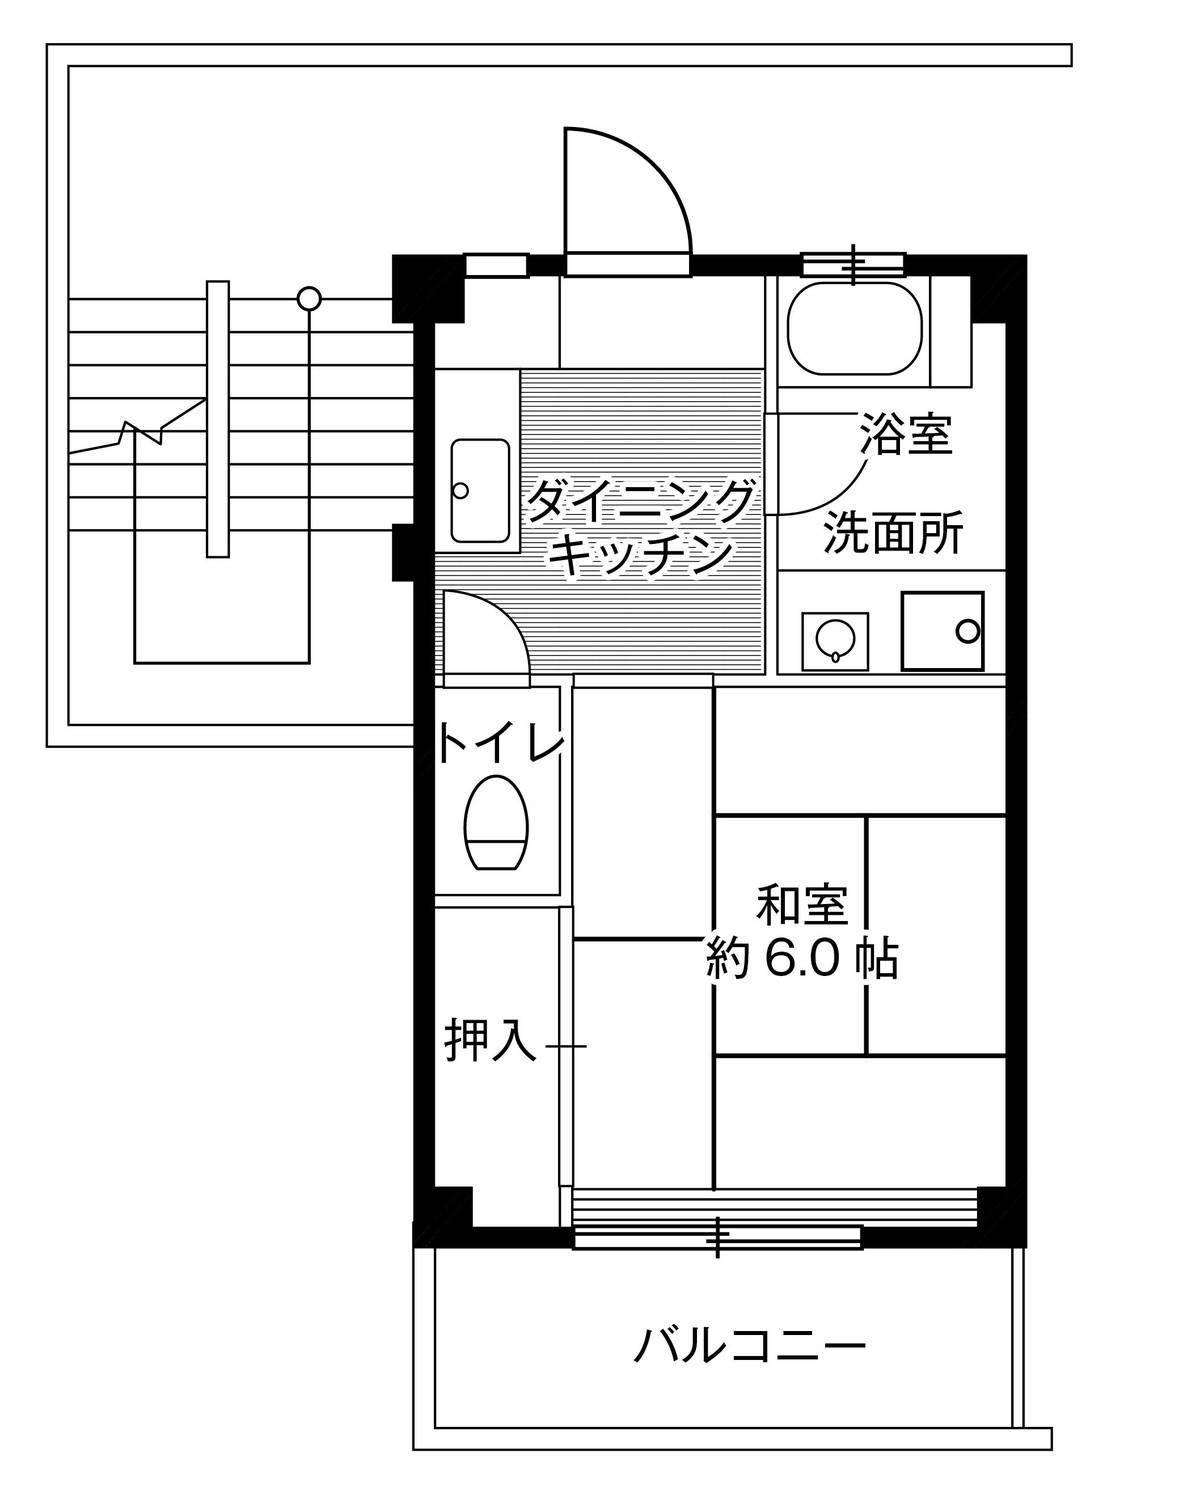 1DK floorplan of Village House Nishio in Nishio-shi